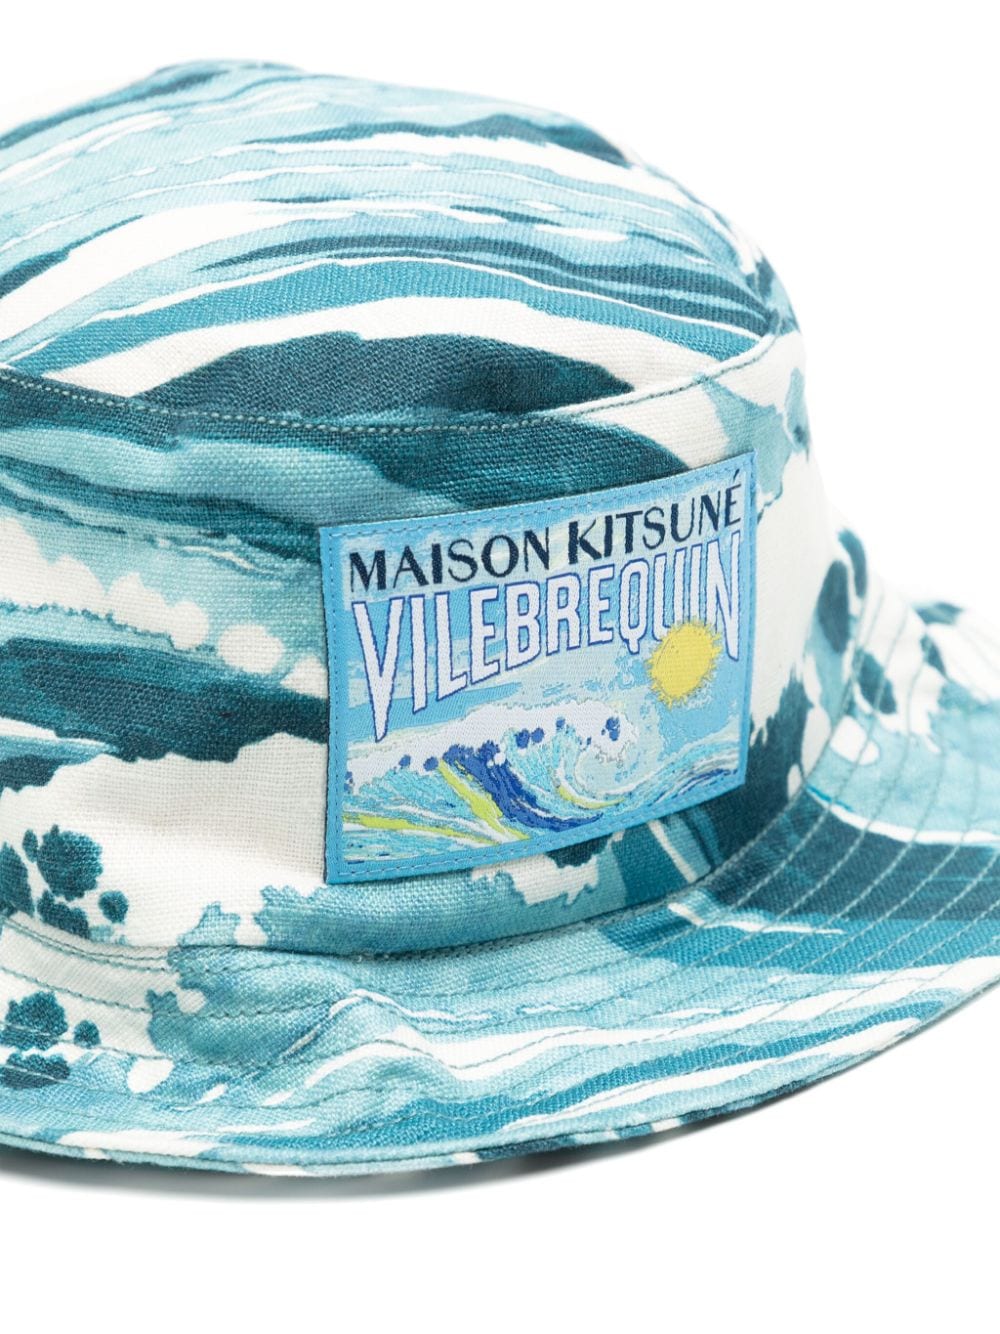 Maison Kitsuné x Vilebrequin tie-dye bucket hat - Blauw